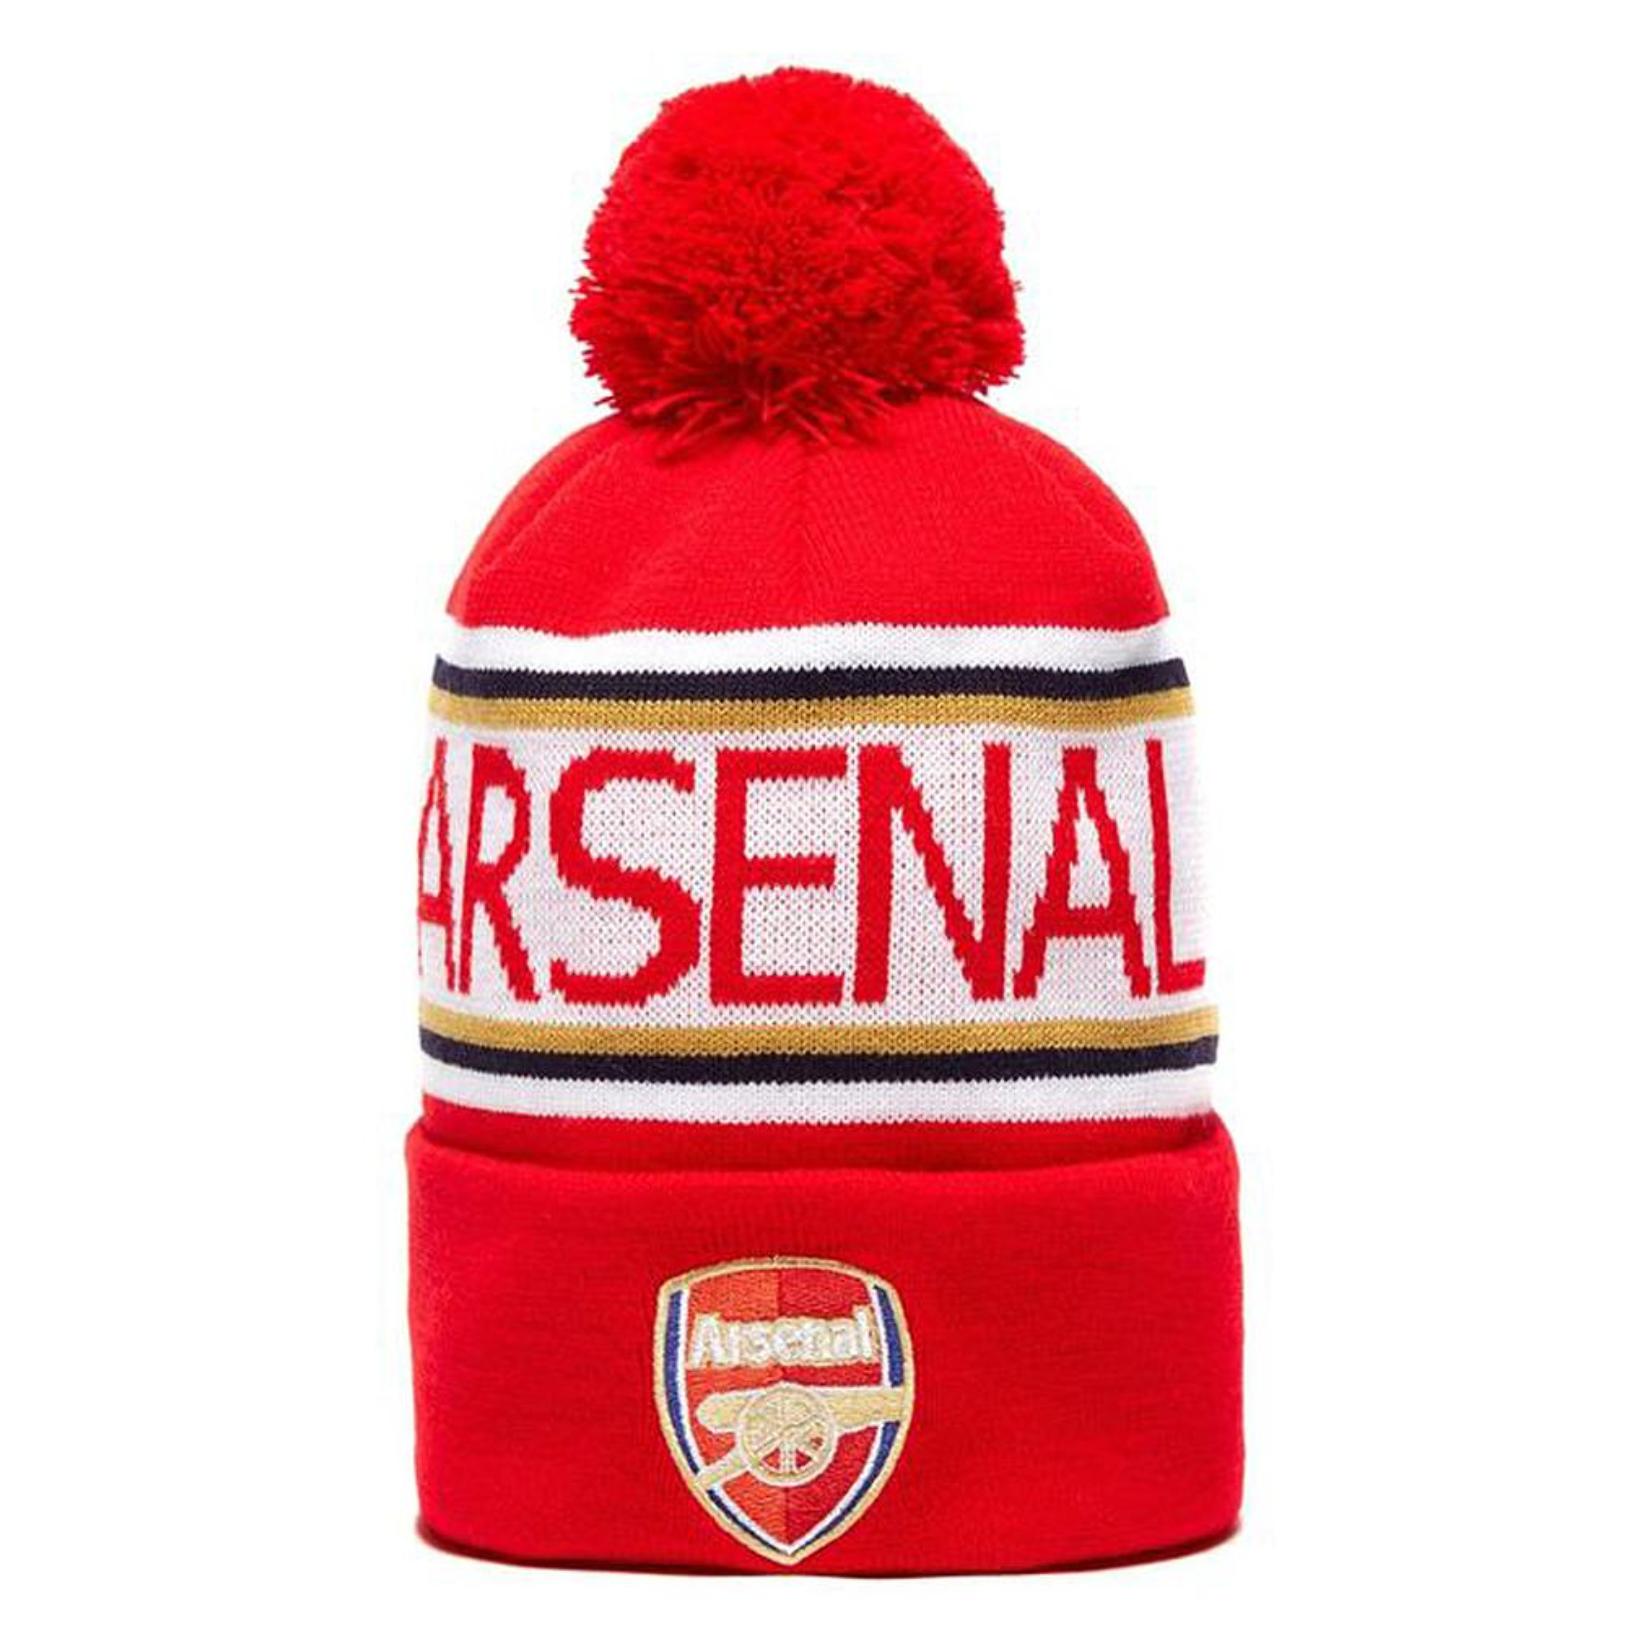 Arsenal Team Merchandise Cuff Beanie